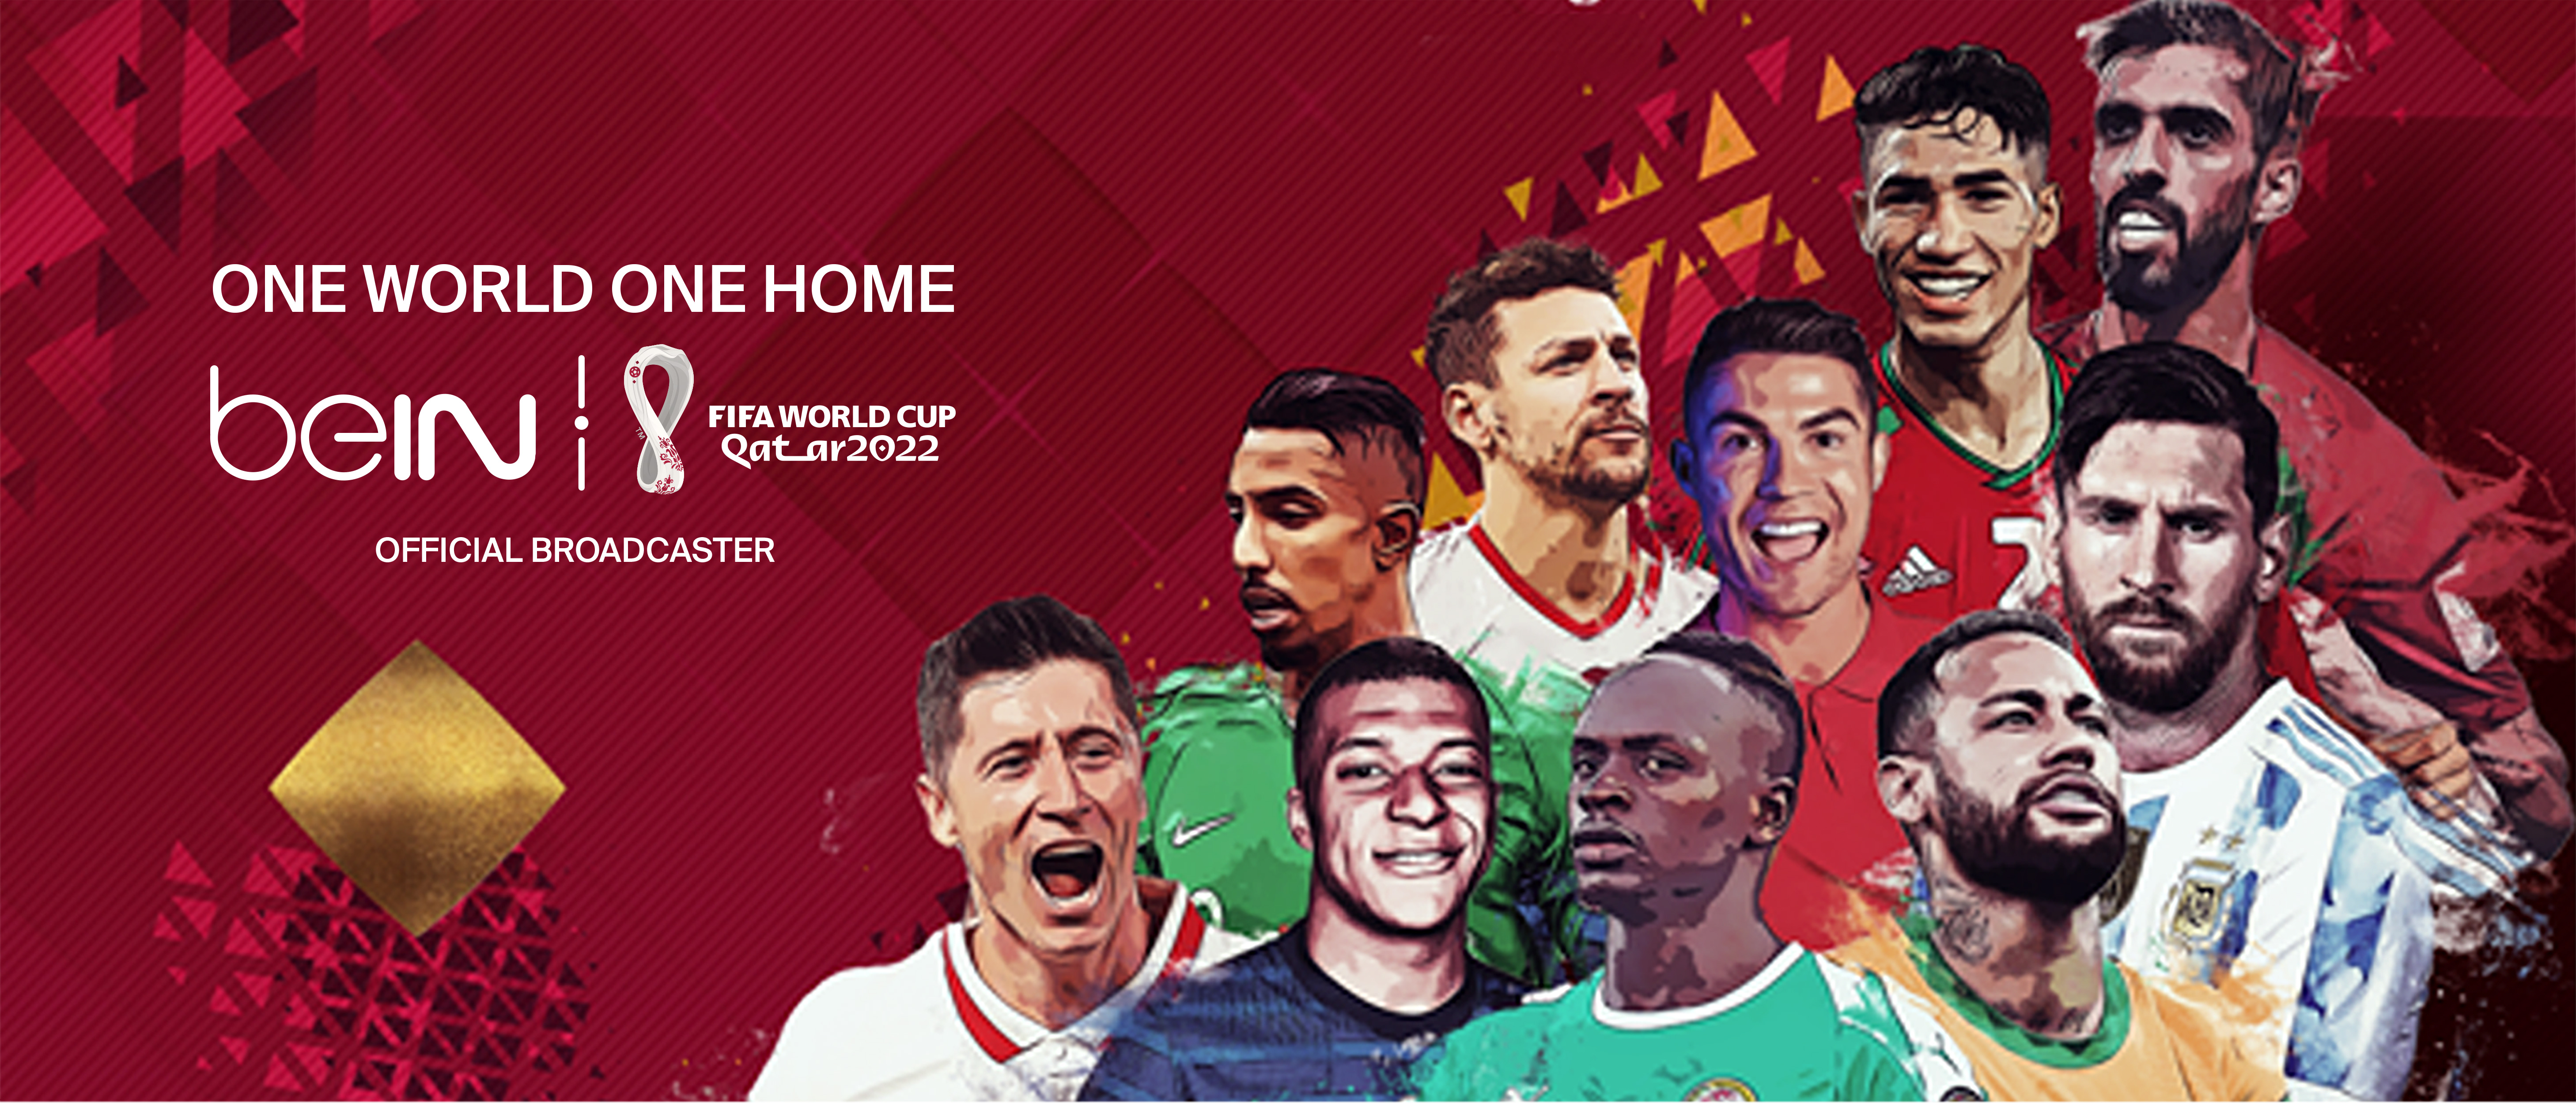 Fifa World Cup Bein Banner